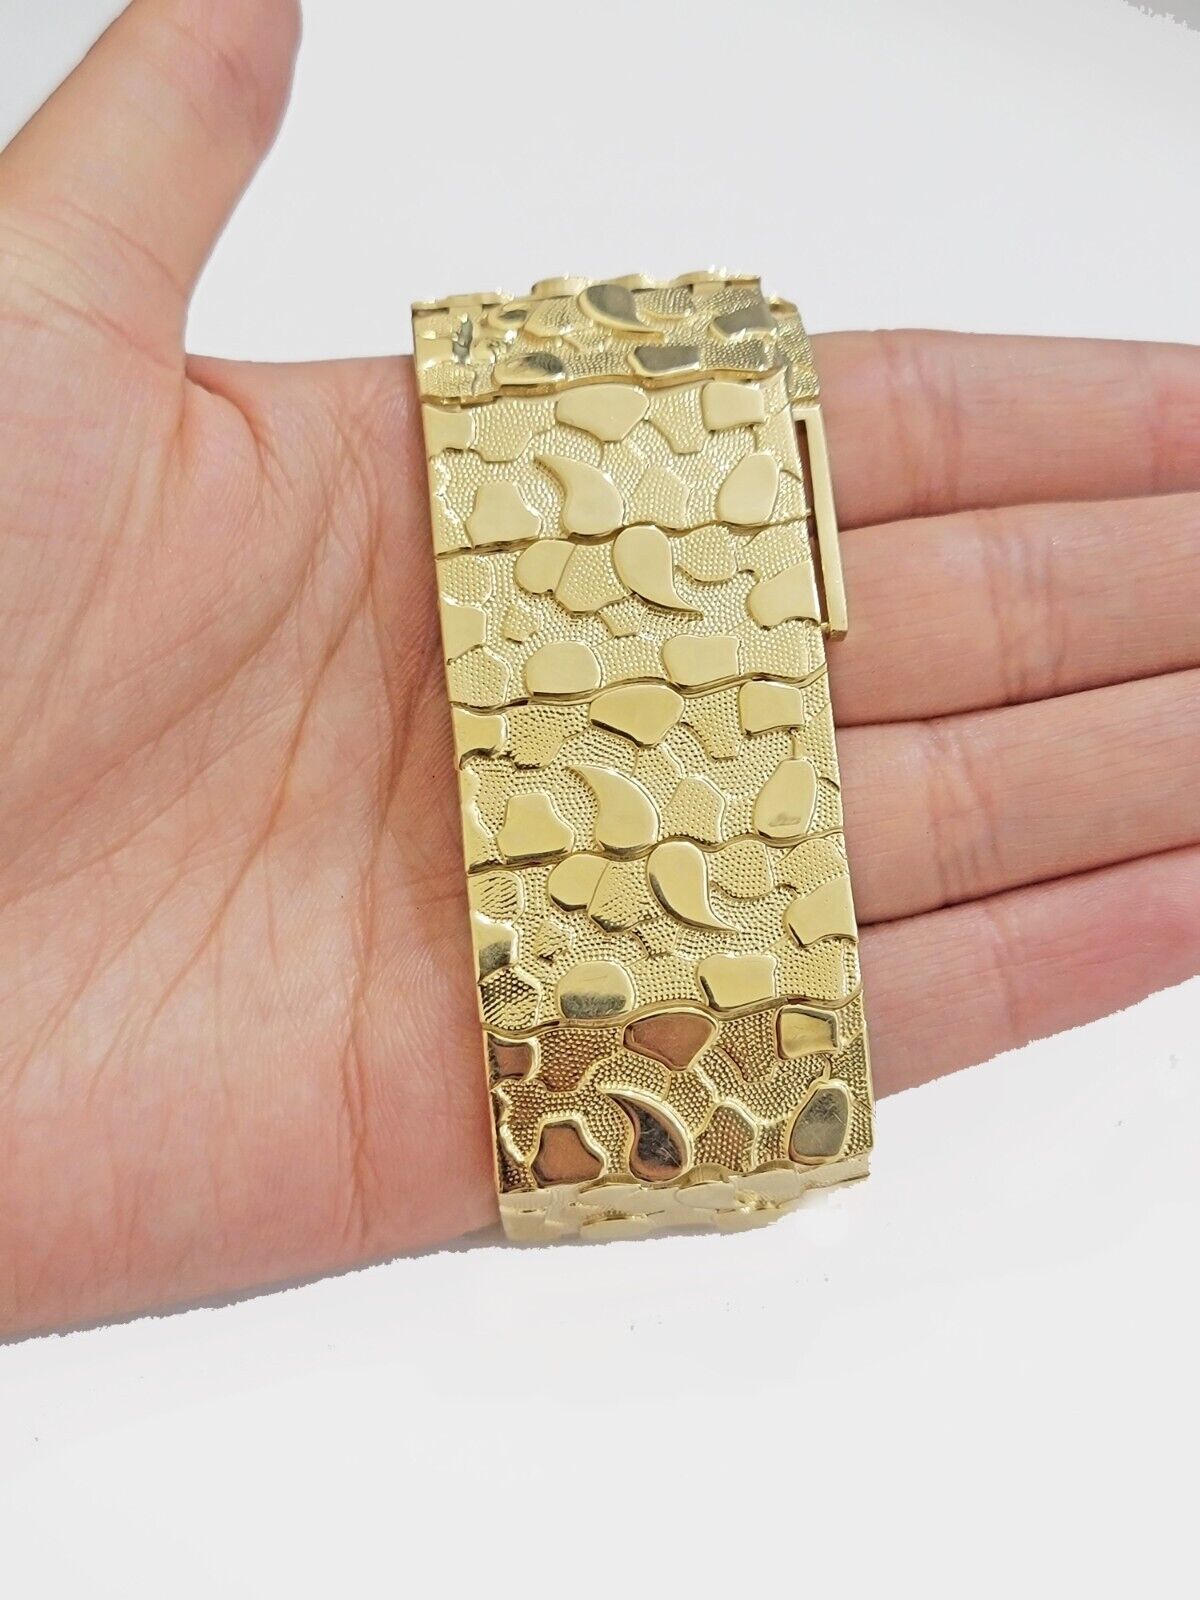 Real 14k Gold Nugget Bracelet Mens 10 Inch Long 30mm Thick Genuine 14 KT Solid